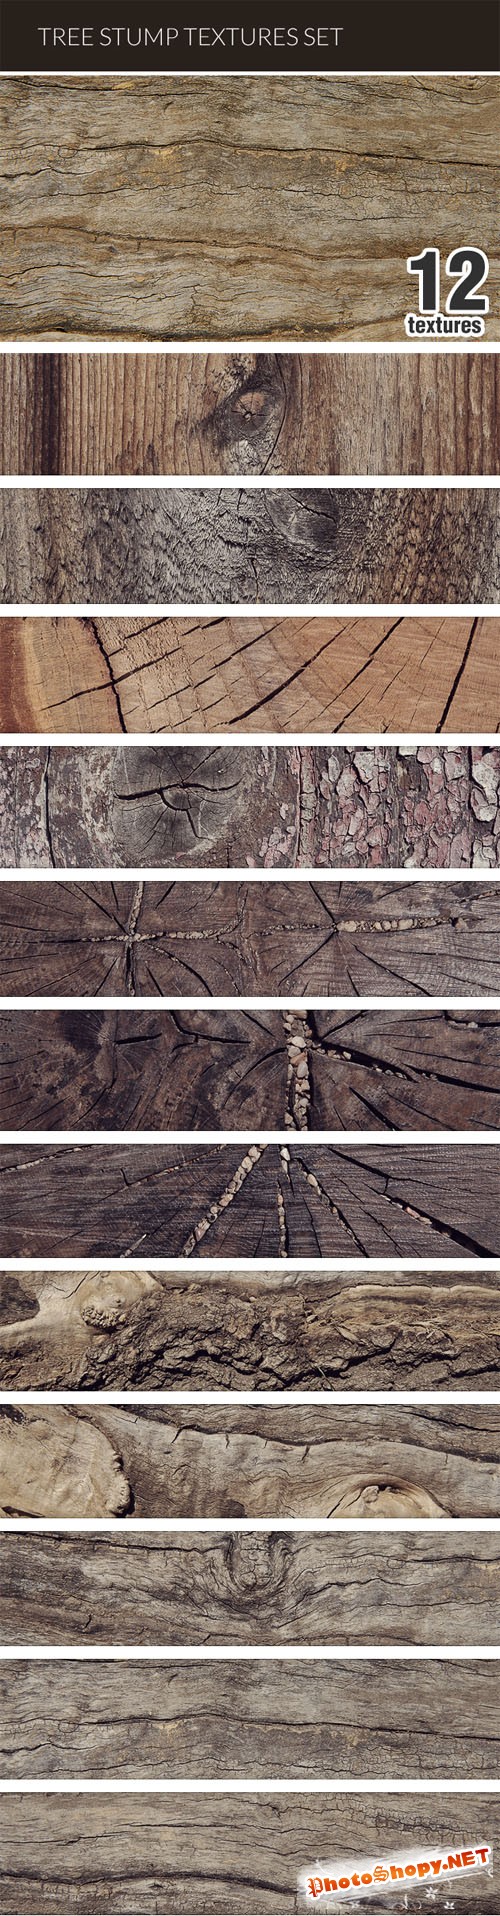 Designtnt - Tree Stump Textures Set 1